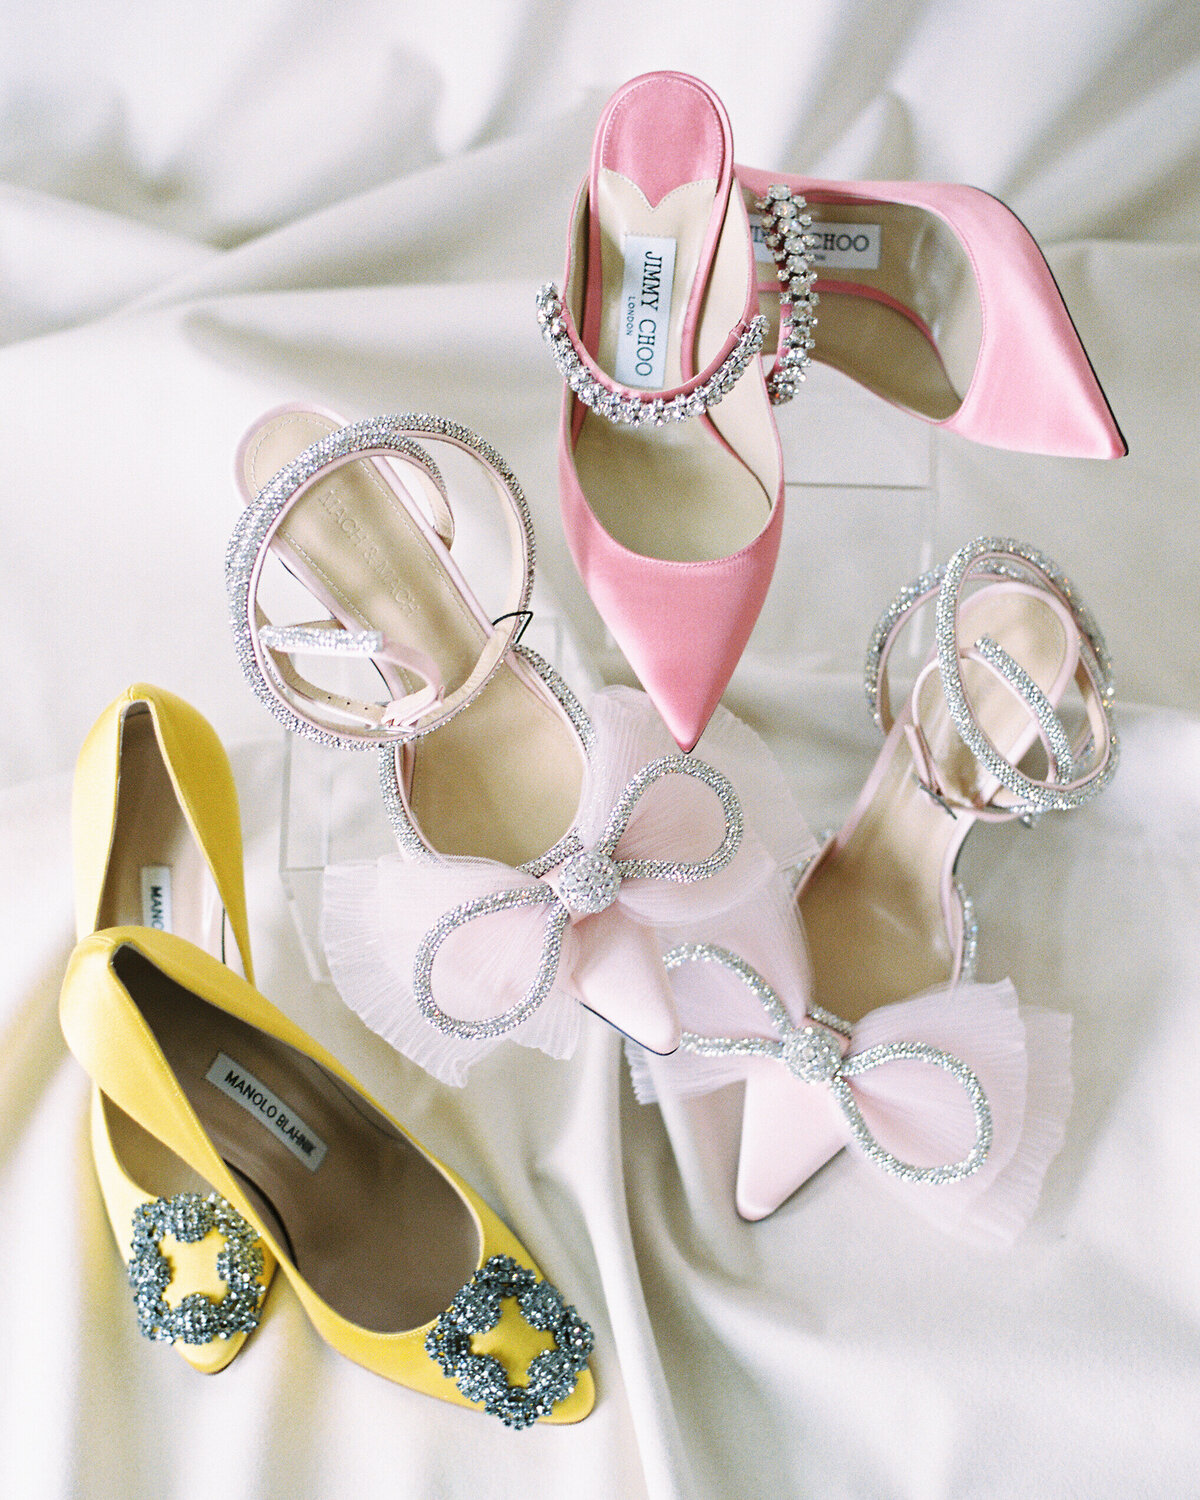 Luxury shoes detail shot of bridal shoes